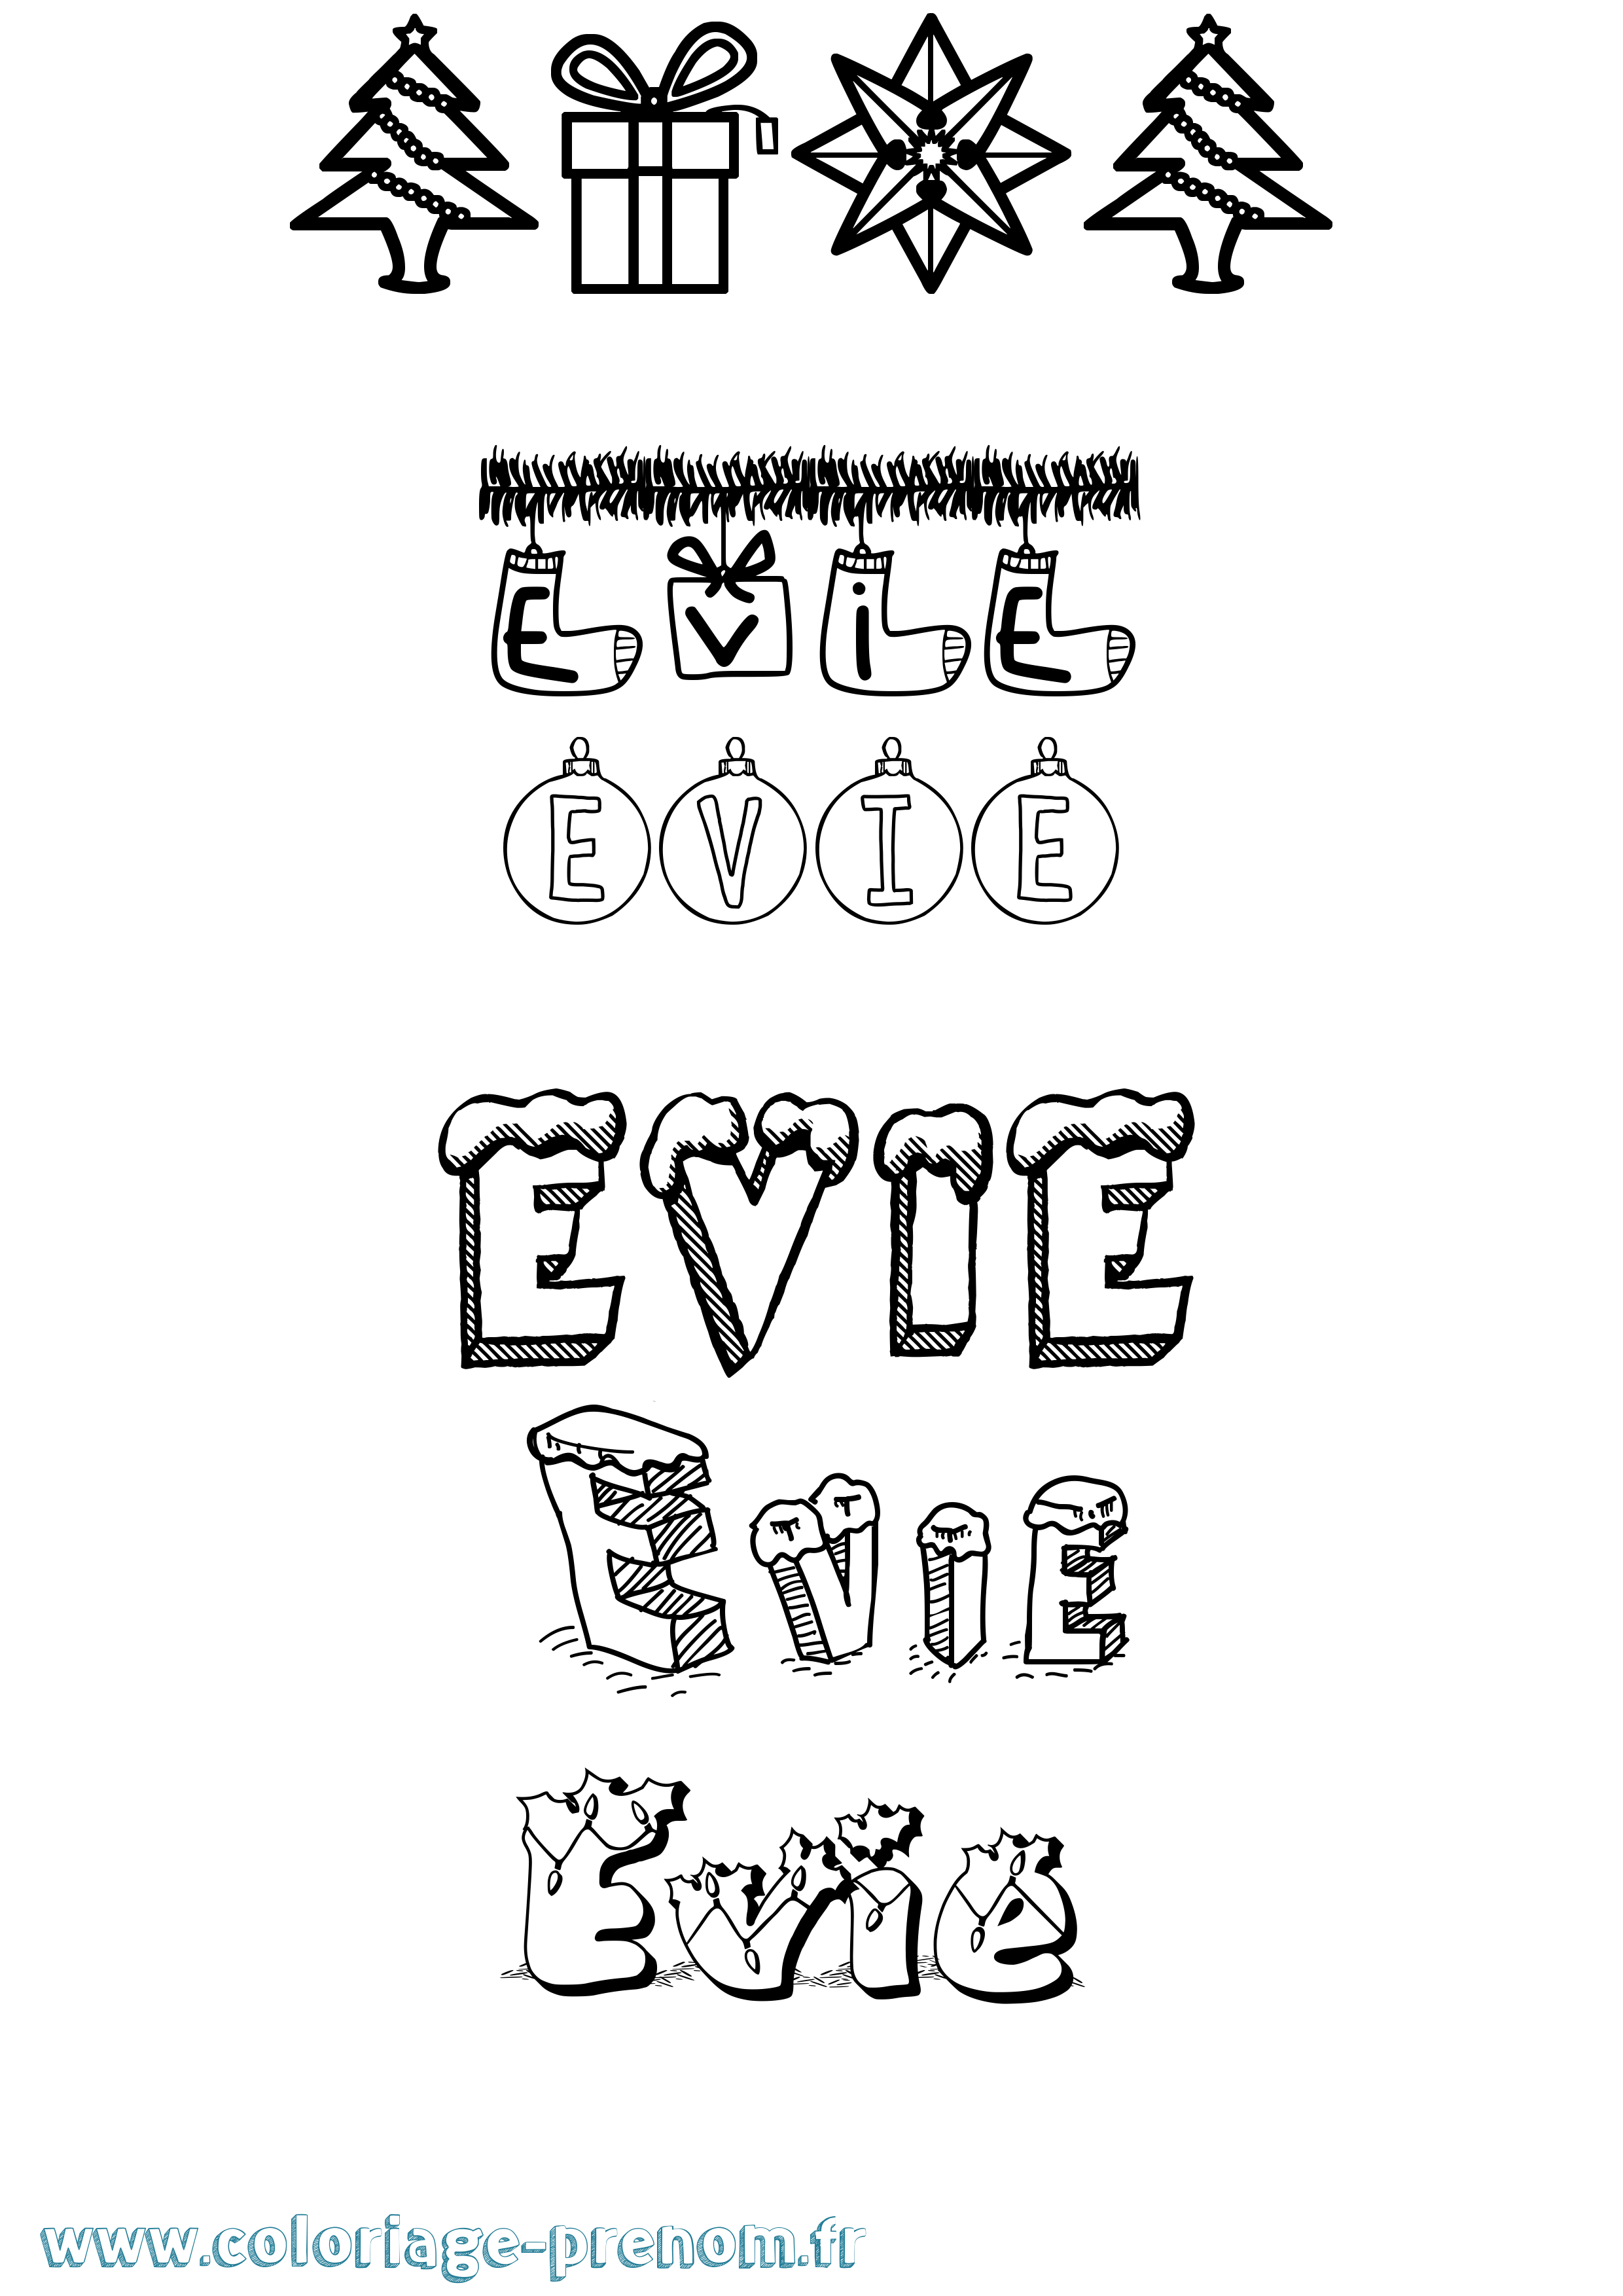 Coloriage prénom Evie Noël